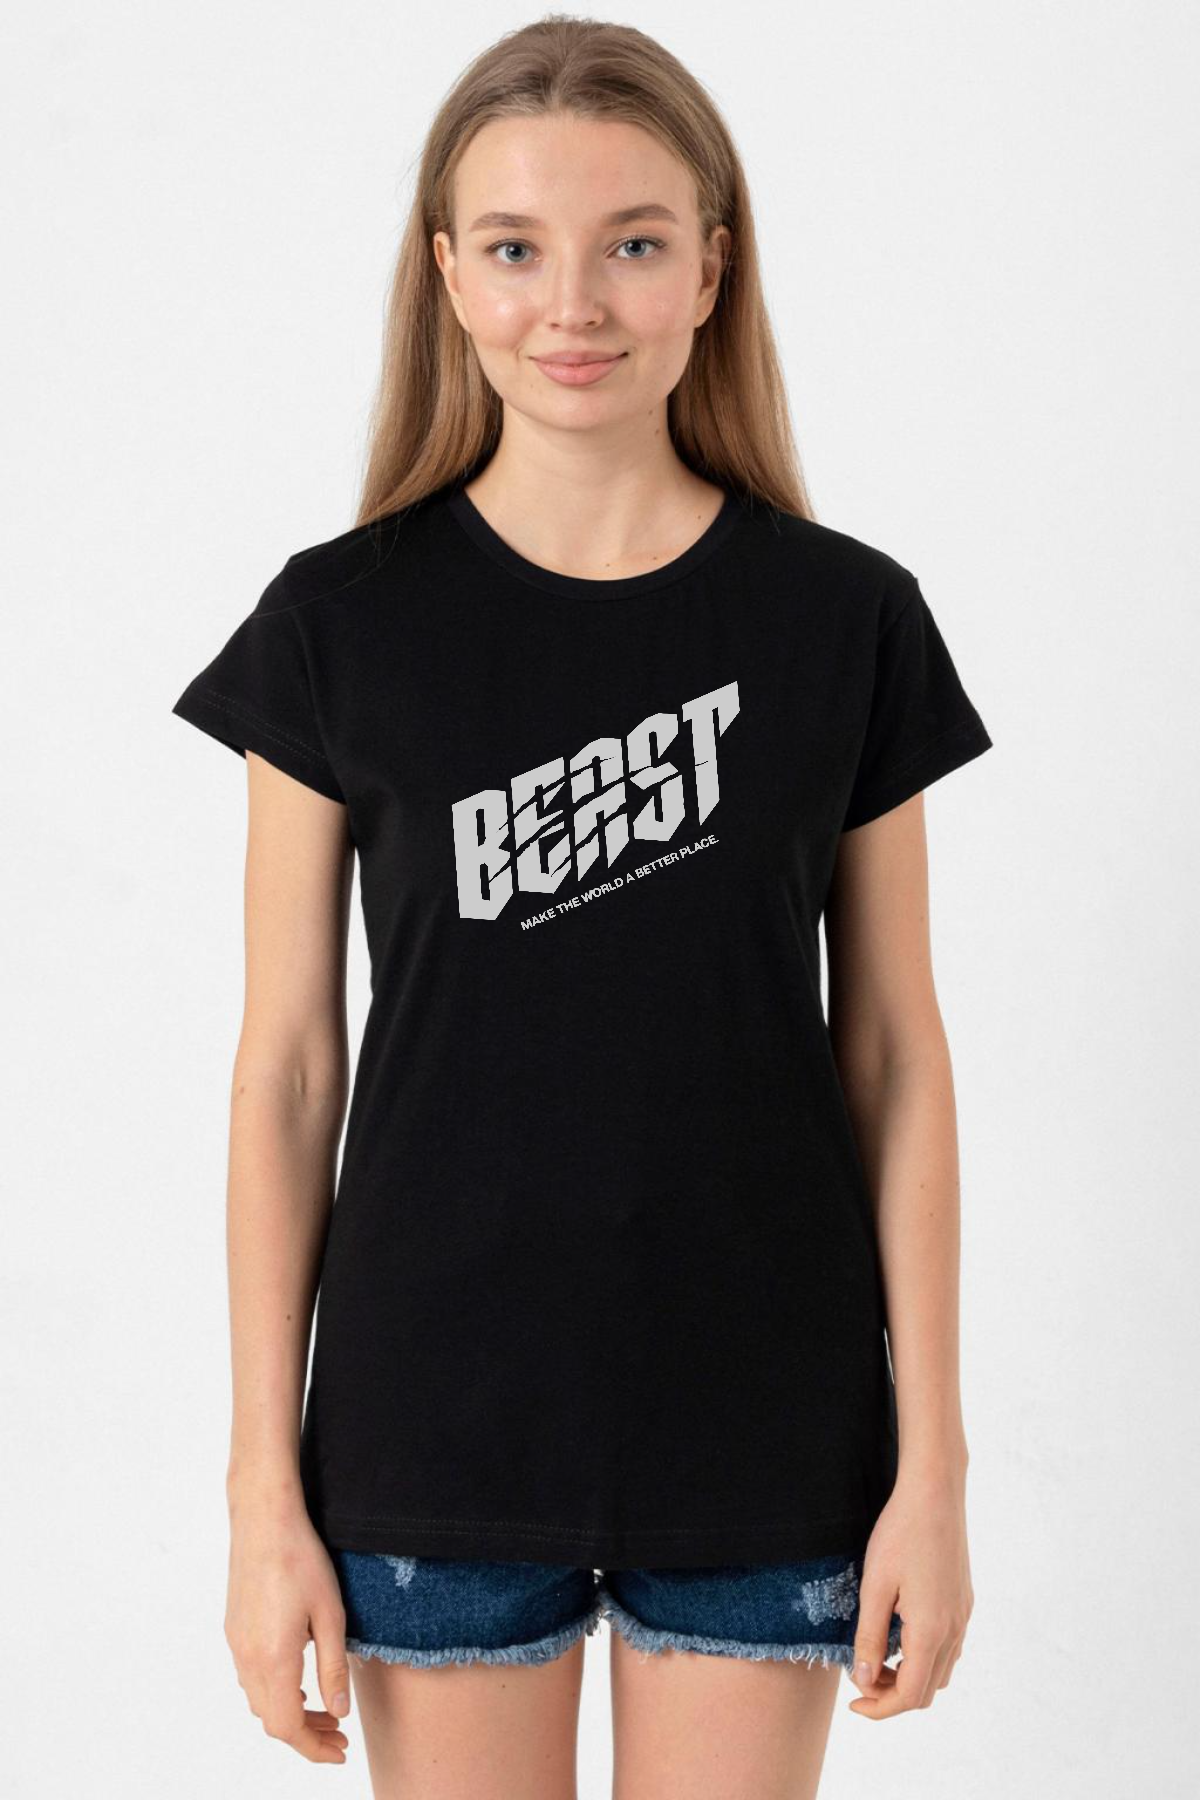 Mr Beast Make The World Siyah Kadın Tshirt